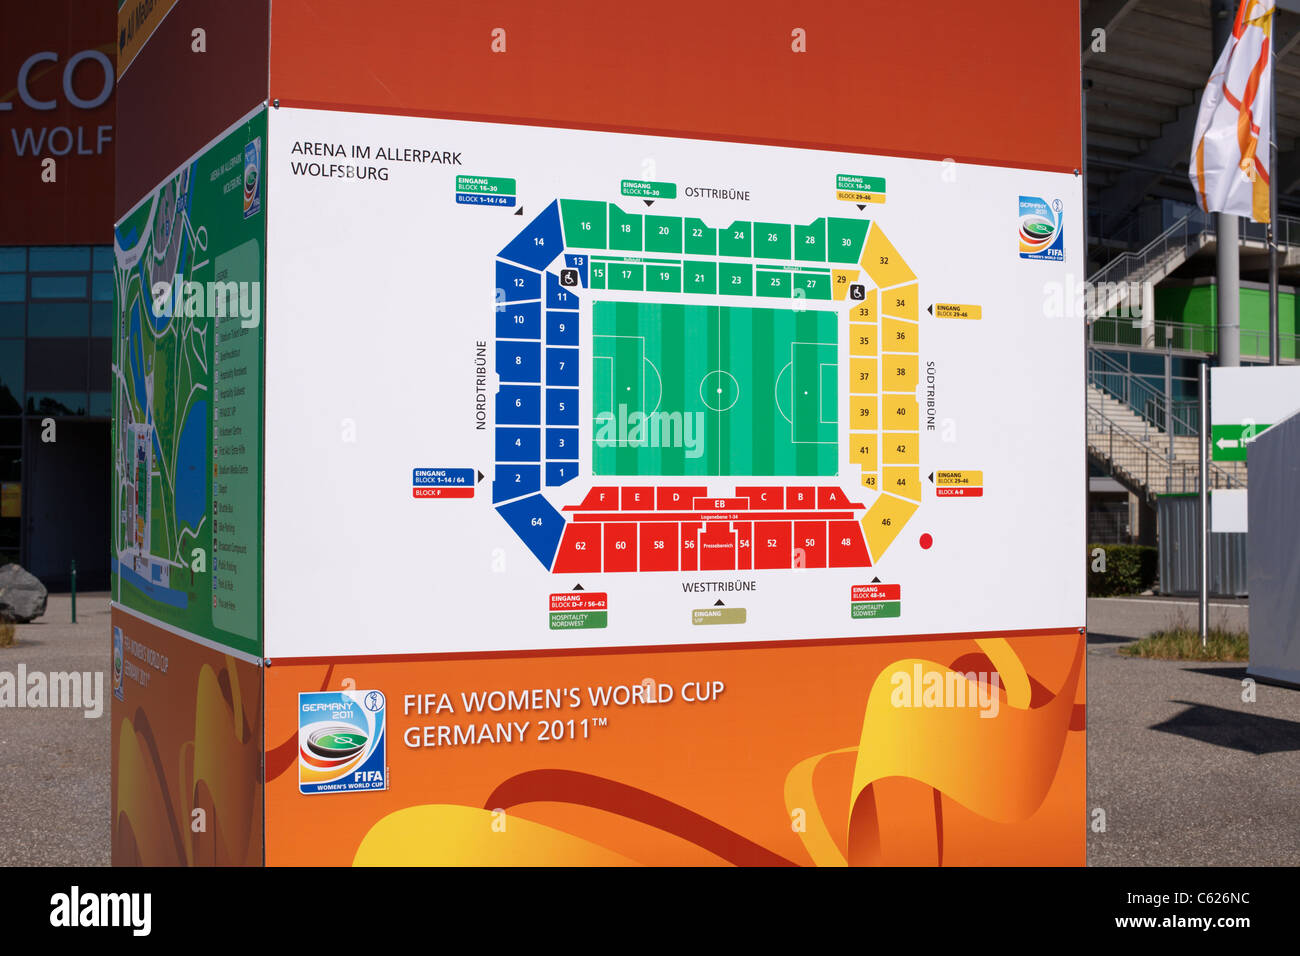 Tu Football Stadium Seating Chart